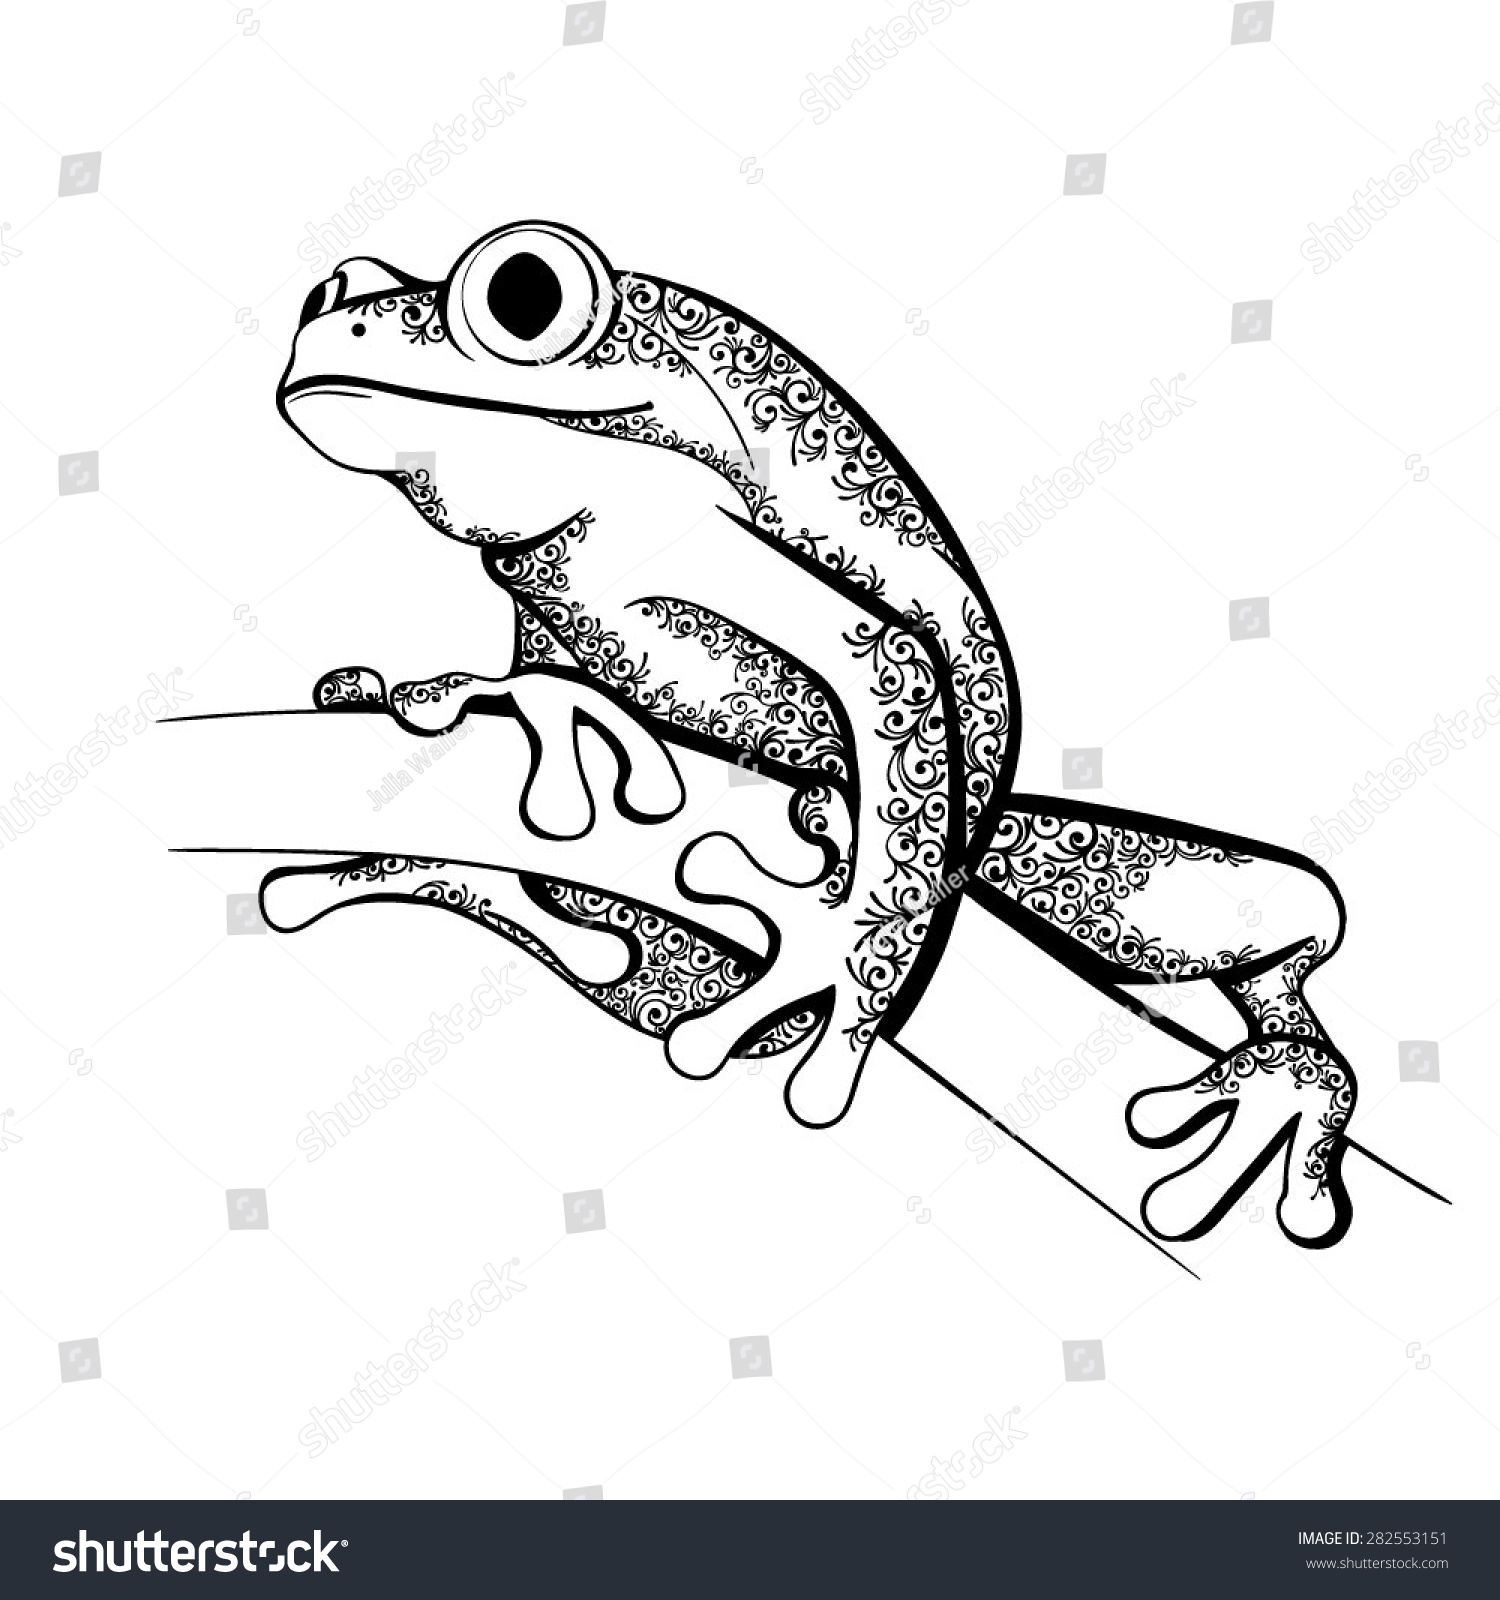 Рисунок лягушки тату черно белая эскиз